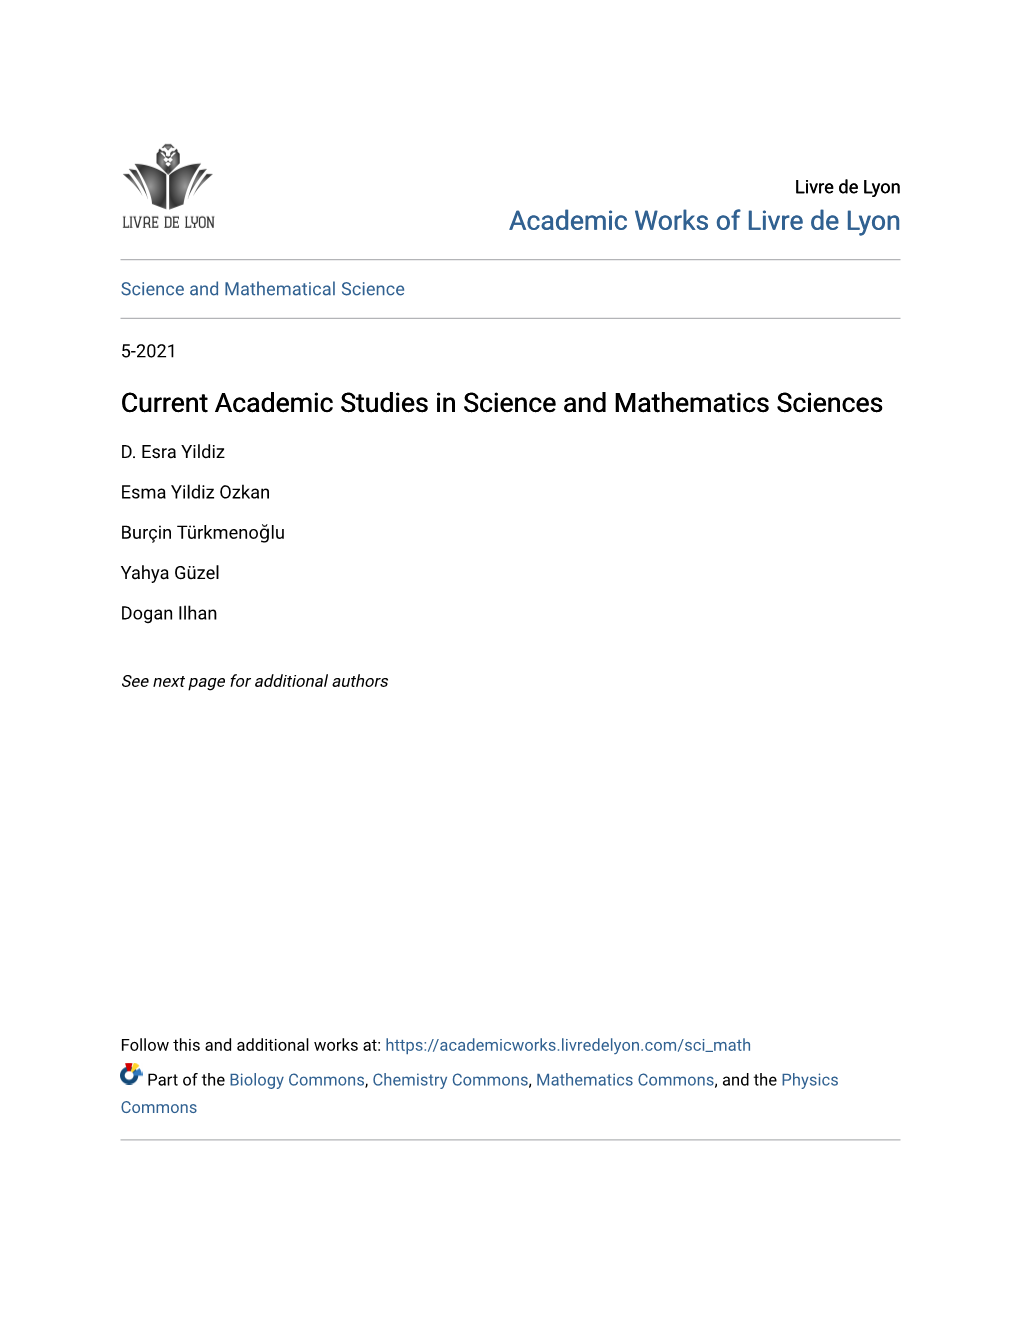 Current Academic Studies in Science and Mathematics Sciences